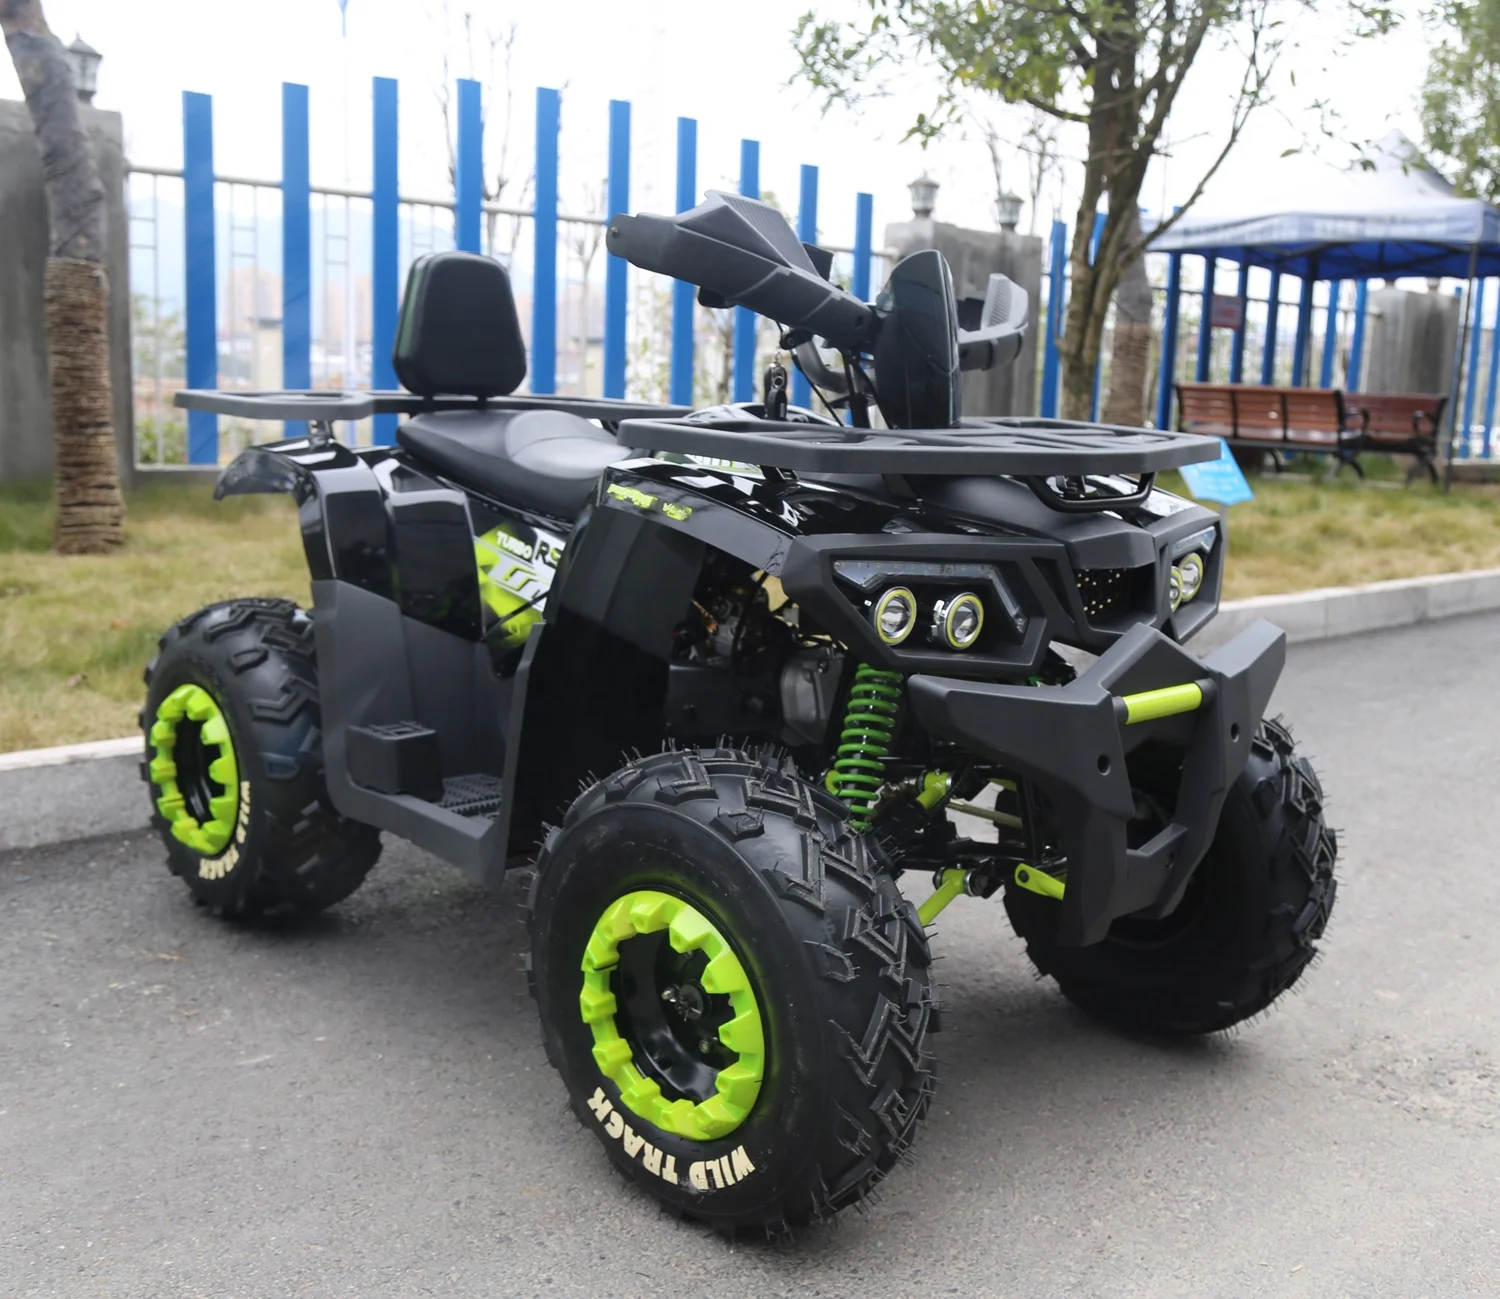 
Tao Motor Brave Pro 200CC ATV chain drive quad adults atv 2x4 atv 200cc EPA ECE 